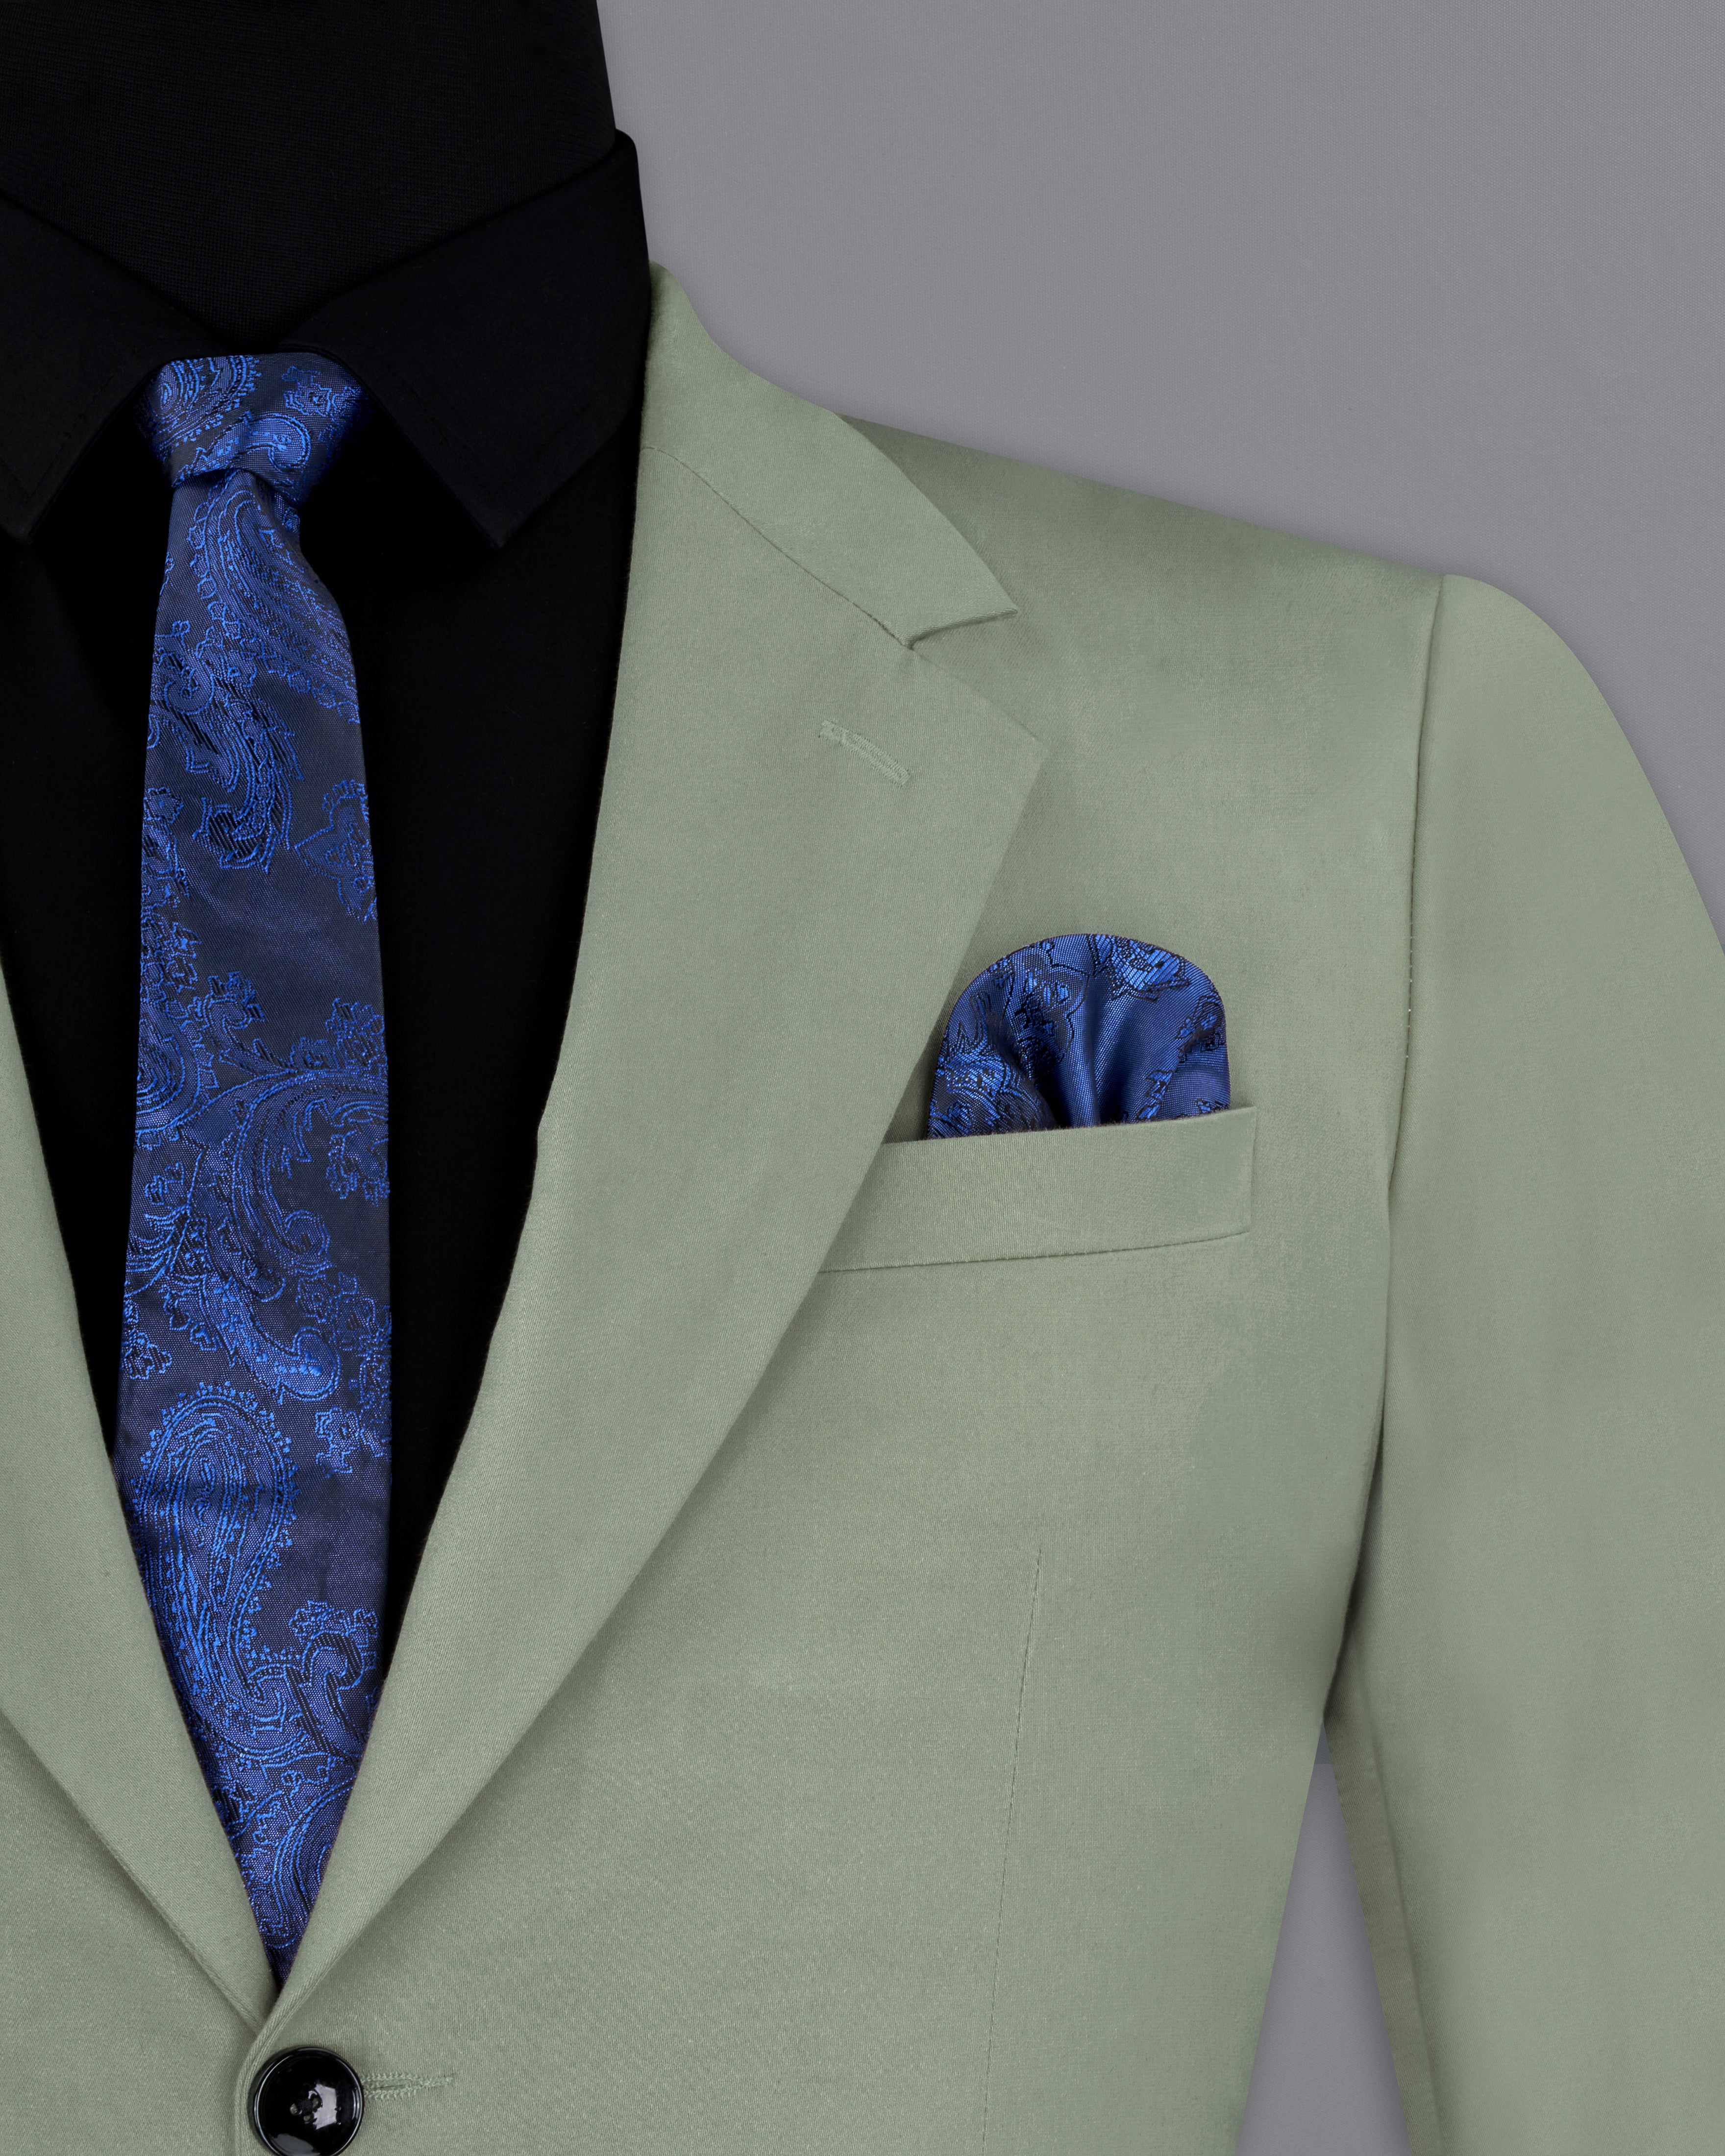 Man Blue Suit Green Tie White Stock Photo 1444297535 | Shutterstock